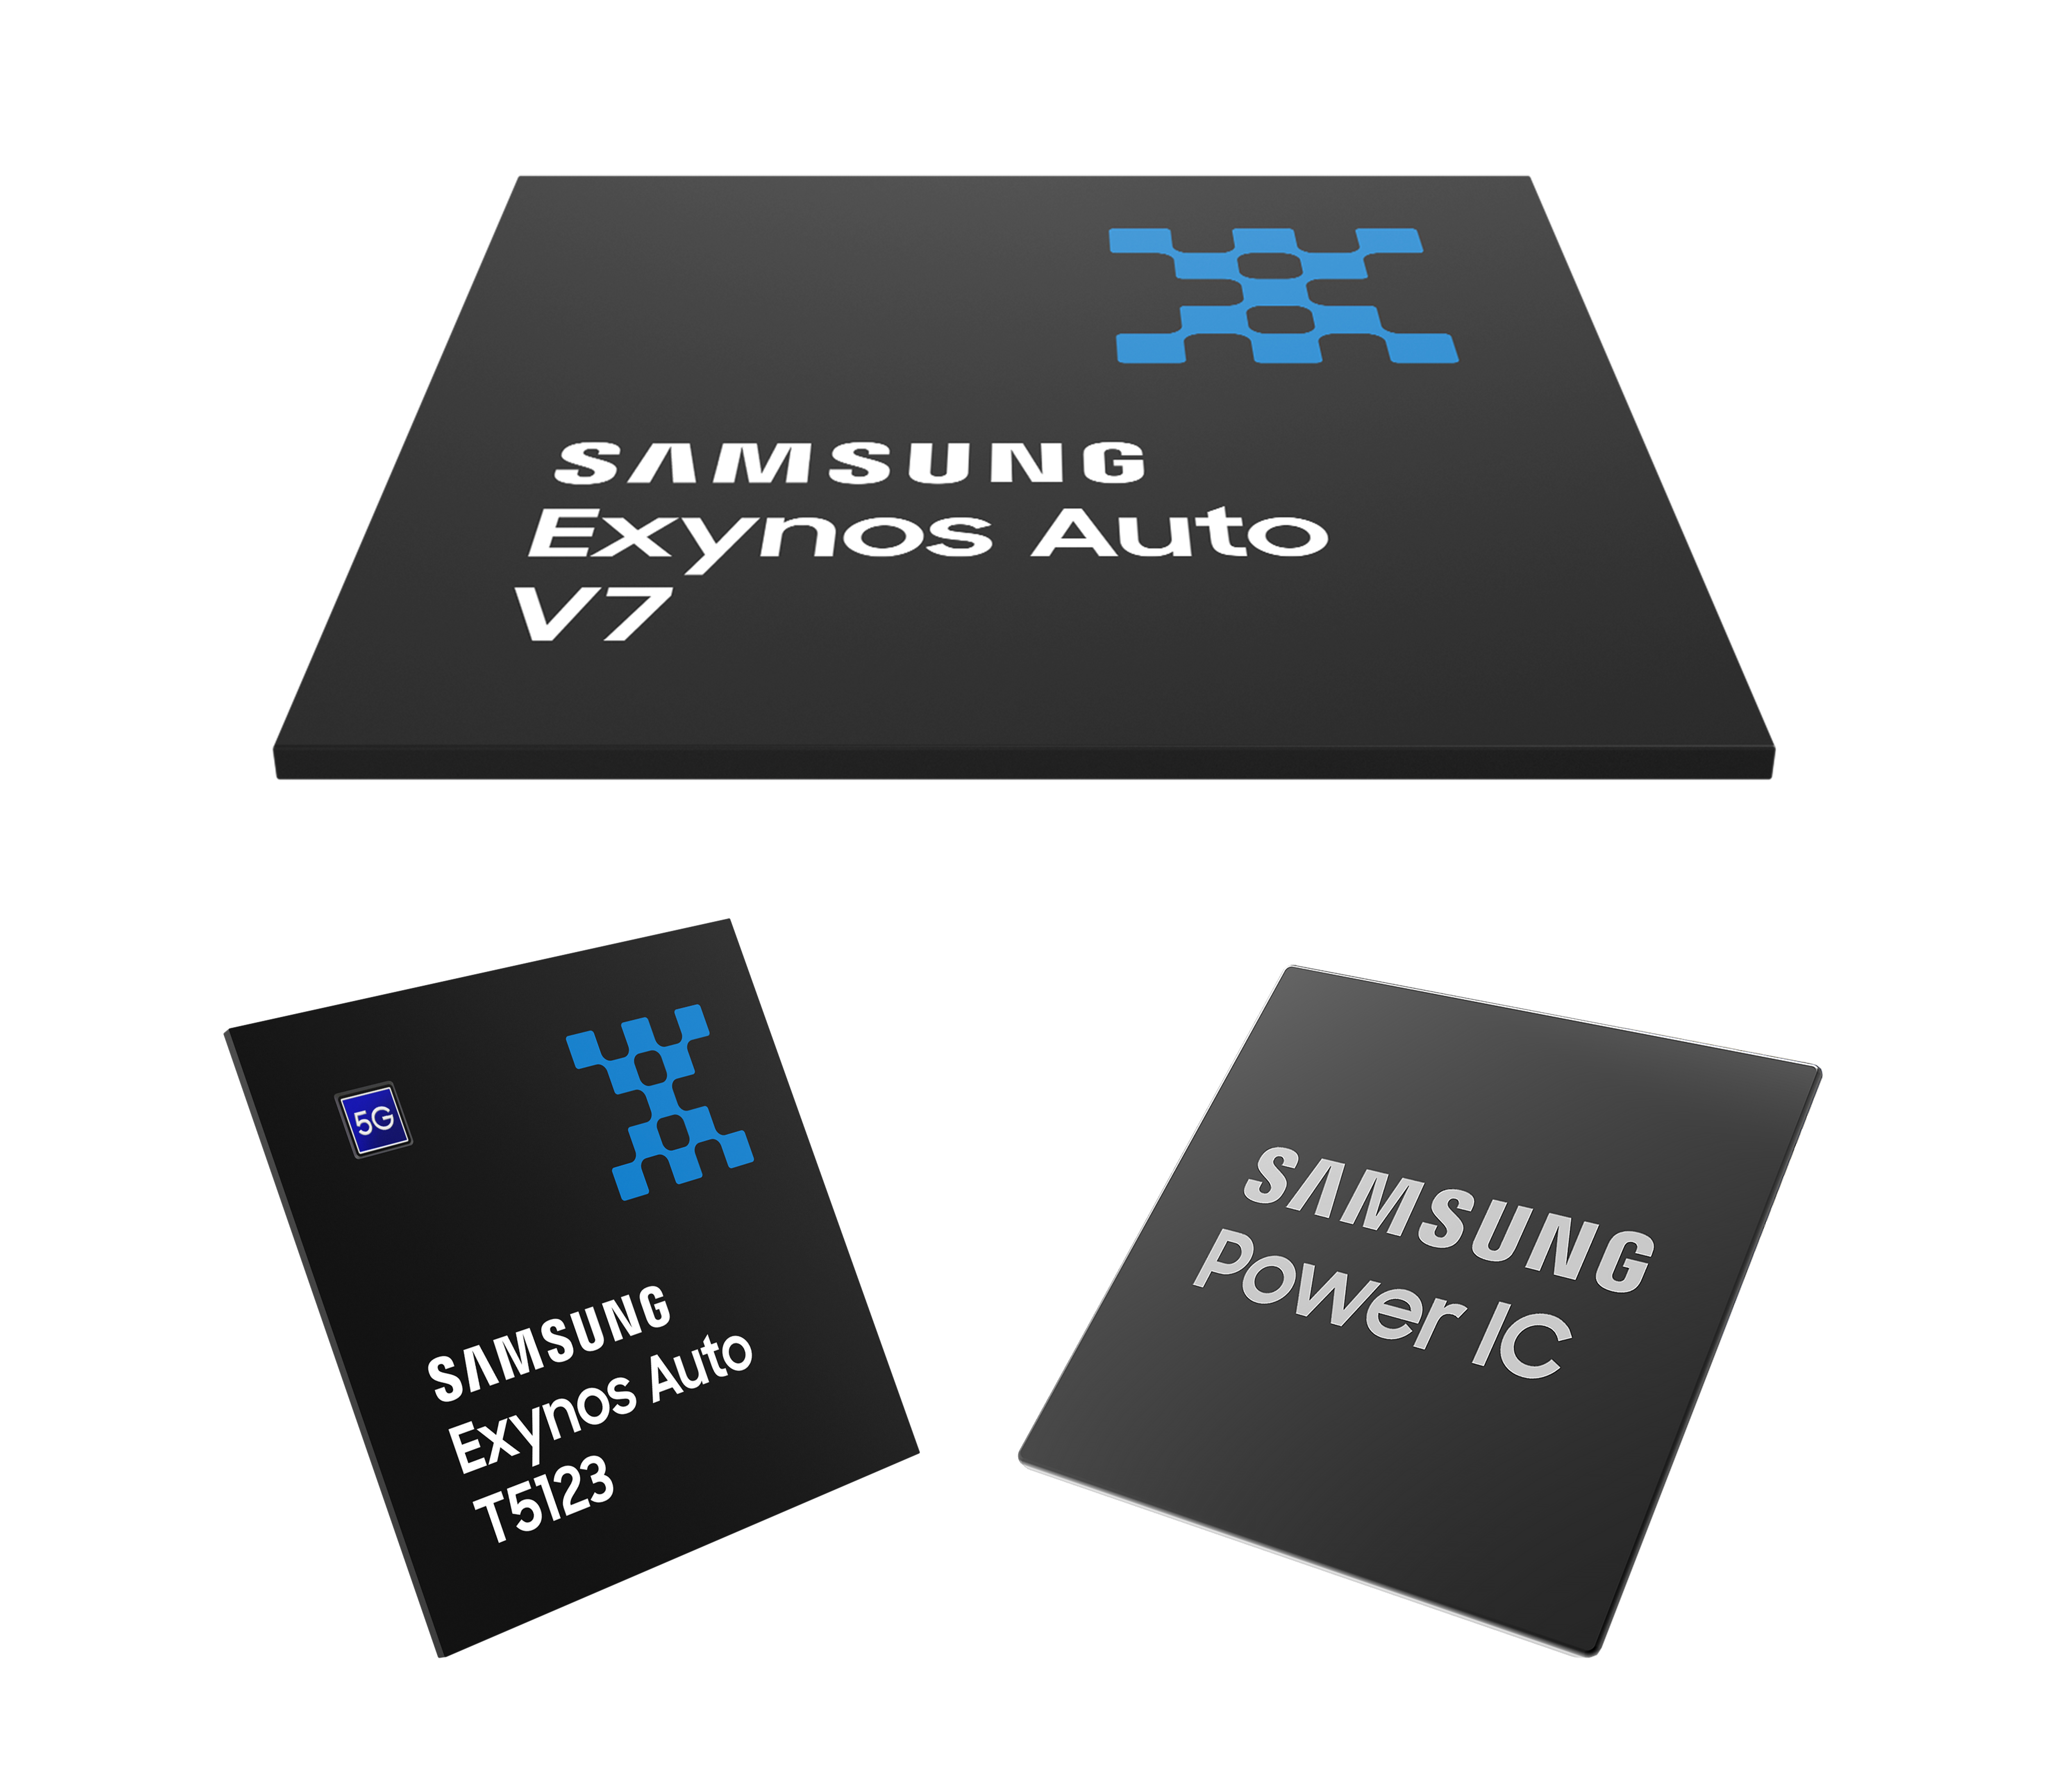 Samsung unveils three of its latest automotive chip solutions